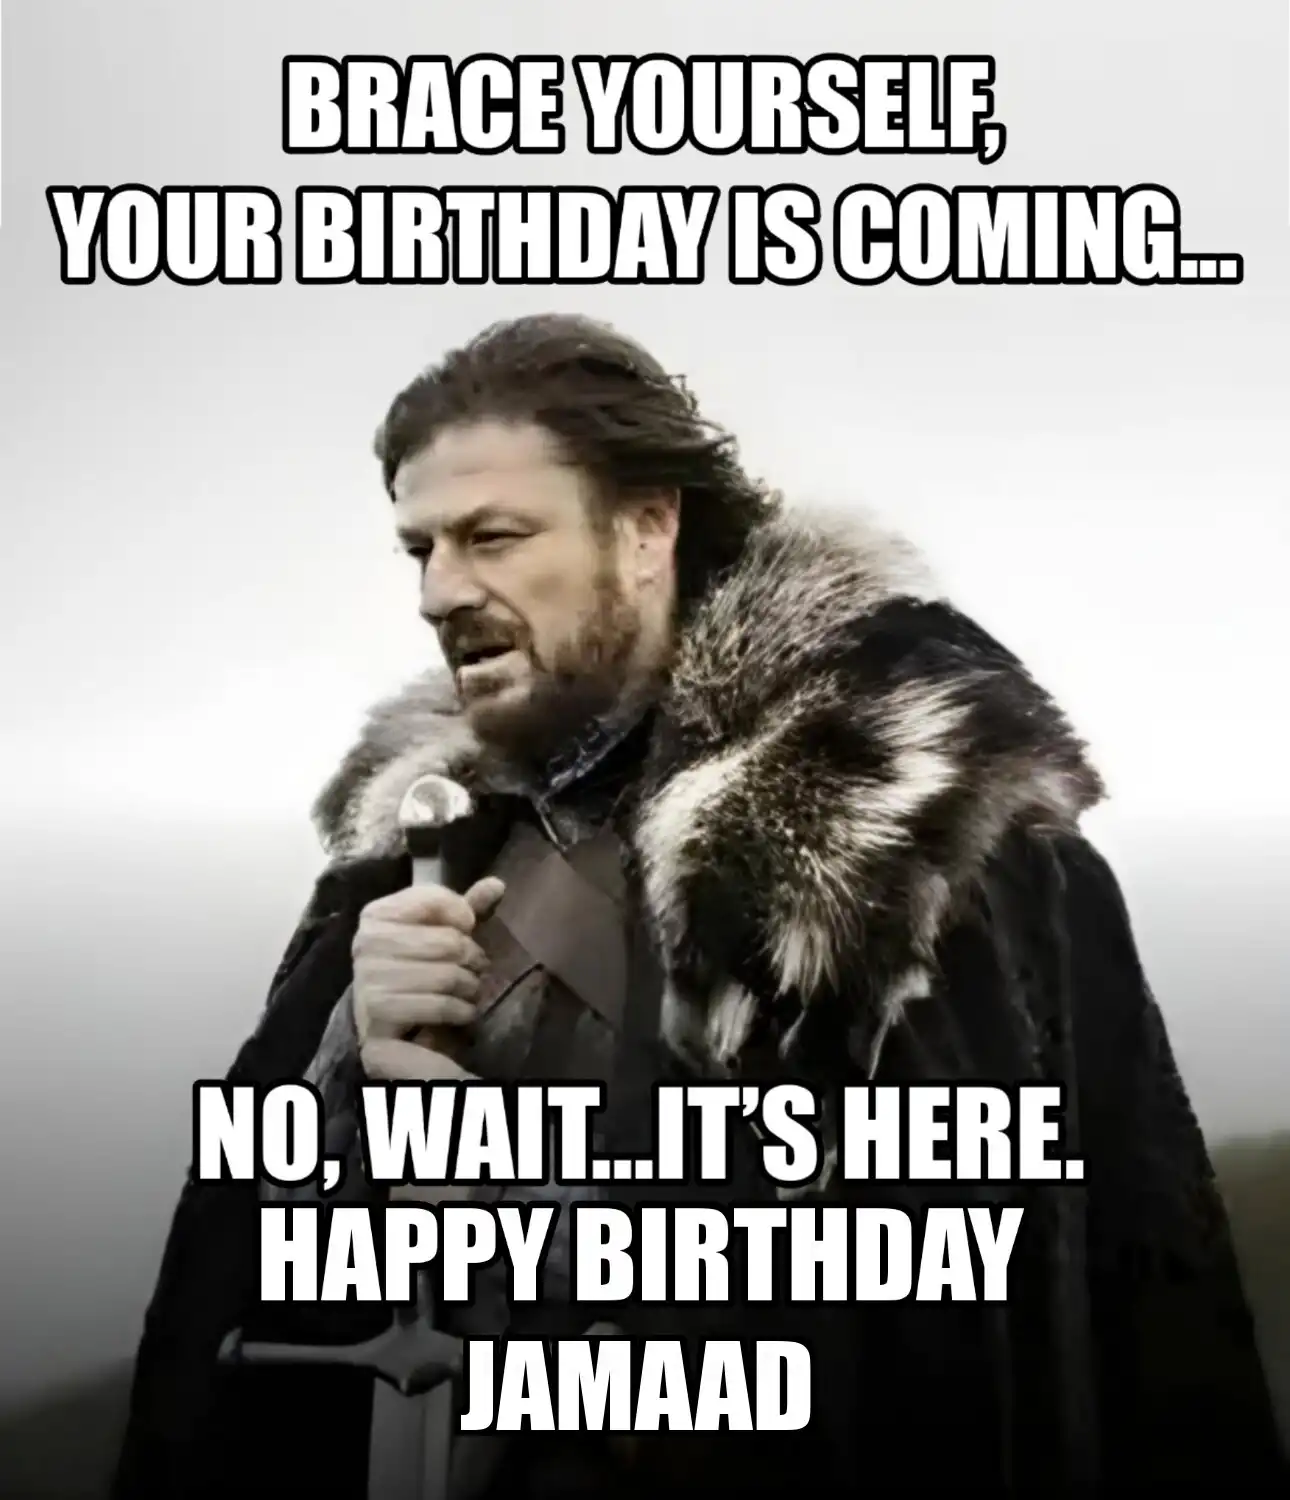 Happy Birthday Jamaad Brace Yourself Your Birthday Is Coming Meme